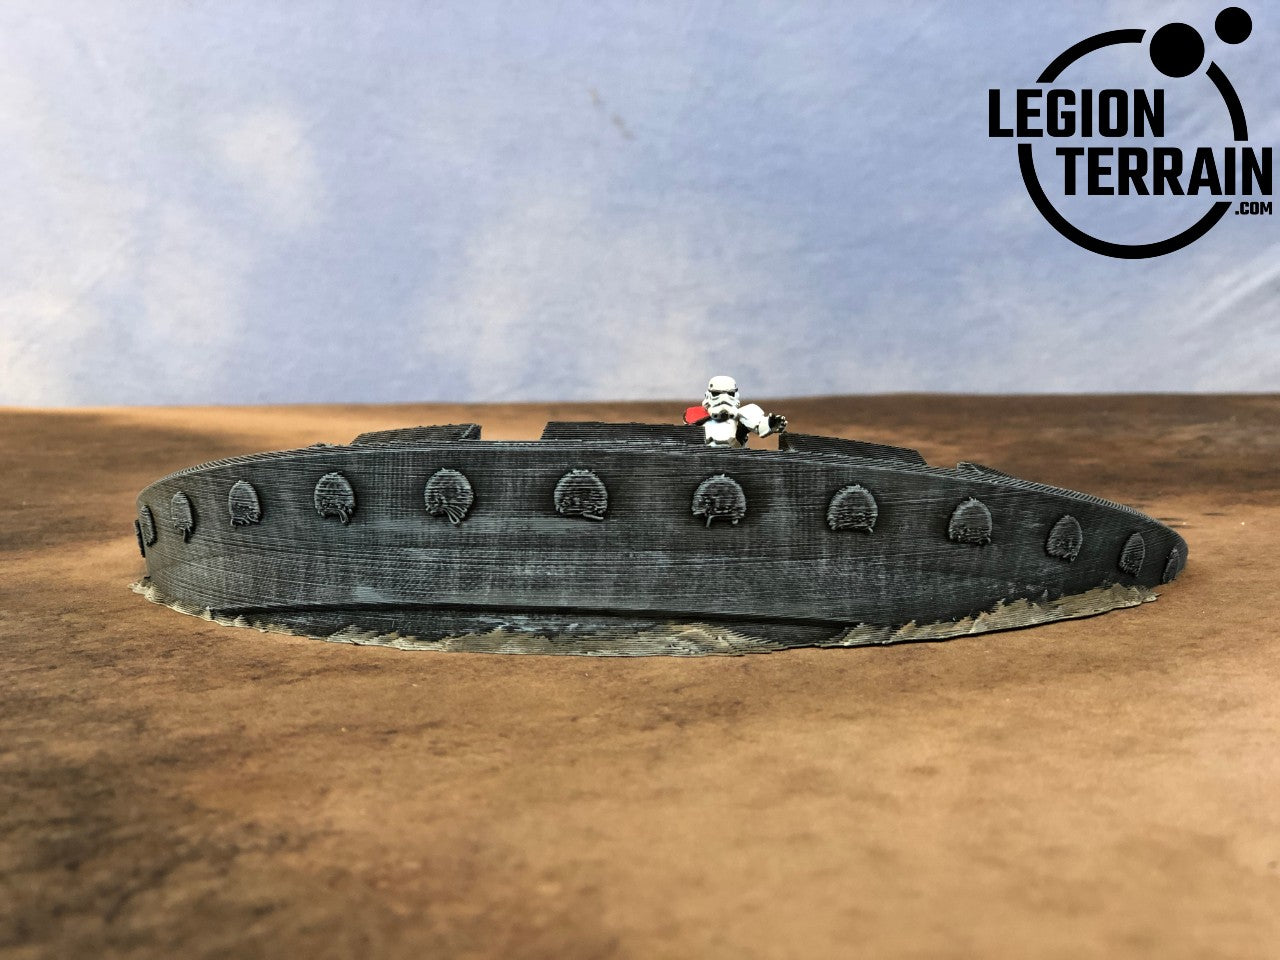 Crashed Capital Ship Engine - LegionTerrain